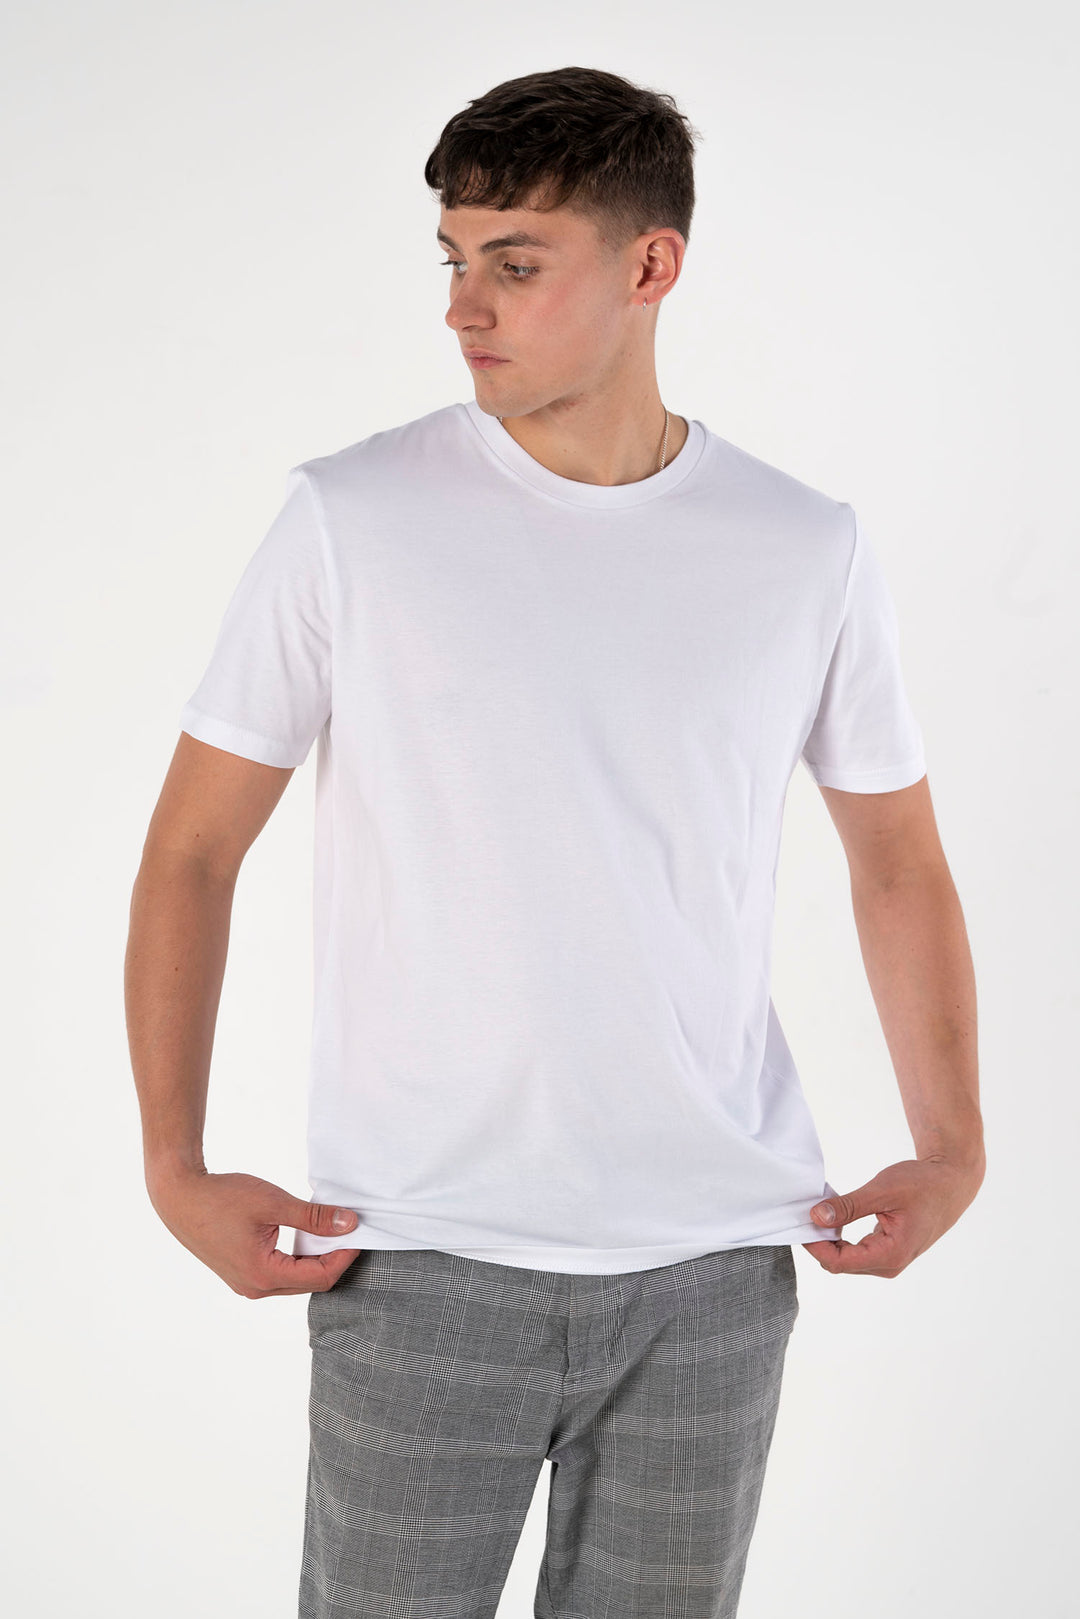 Signature White - Evolve Collection T-shirt-T-shirts-PIRKANI